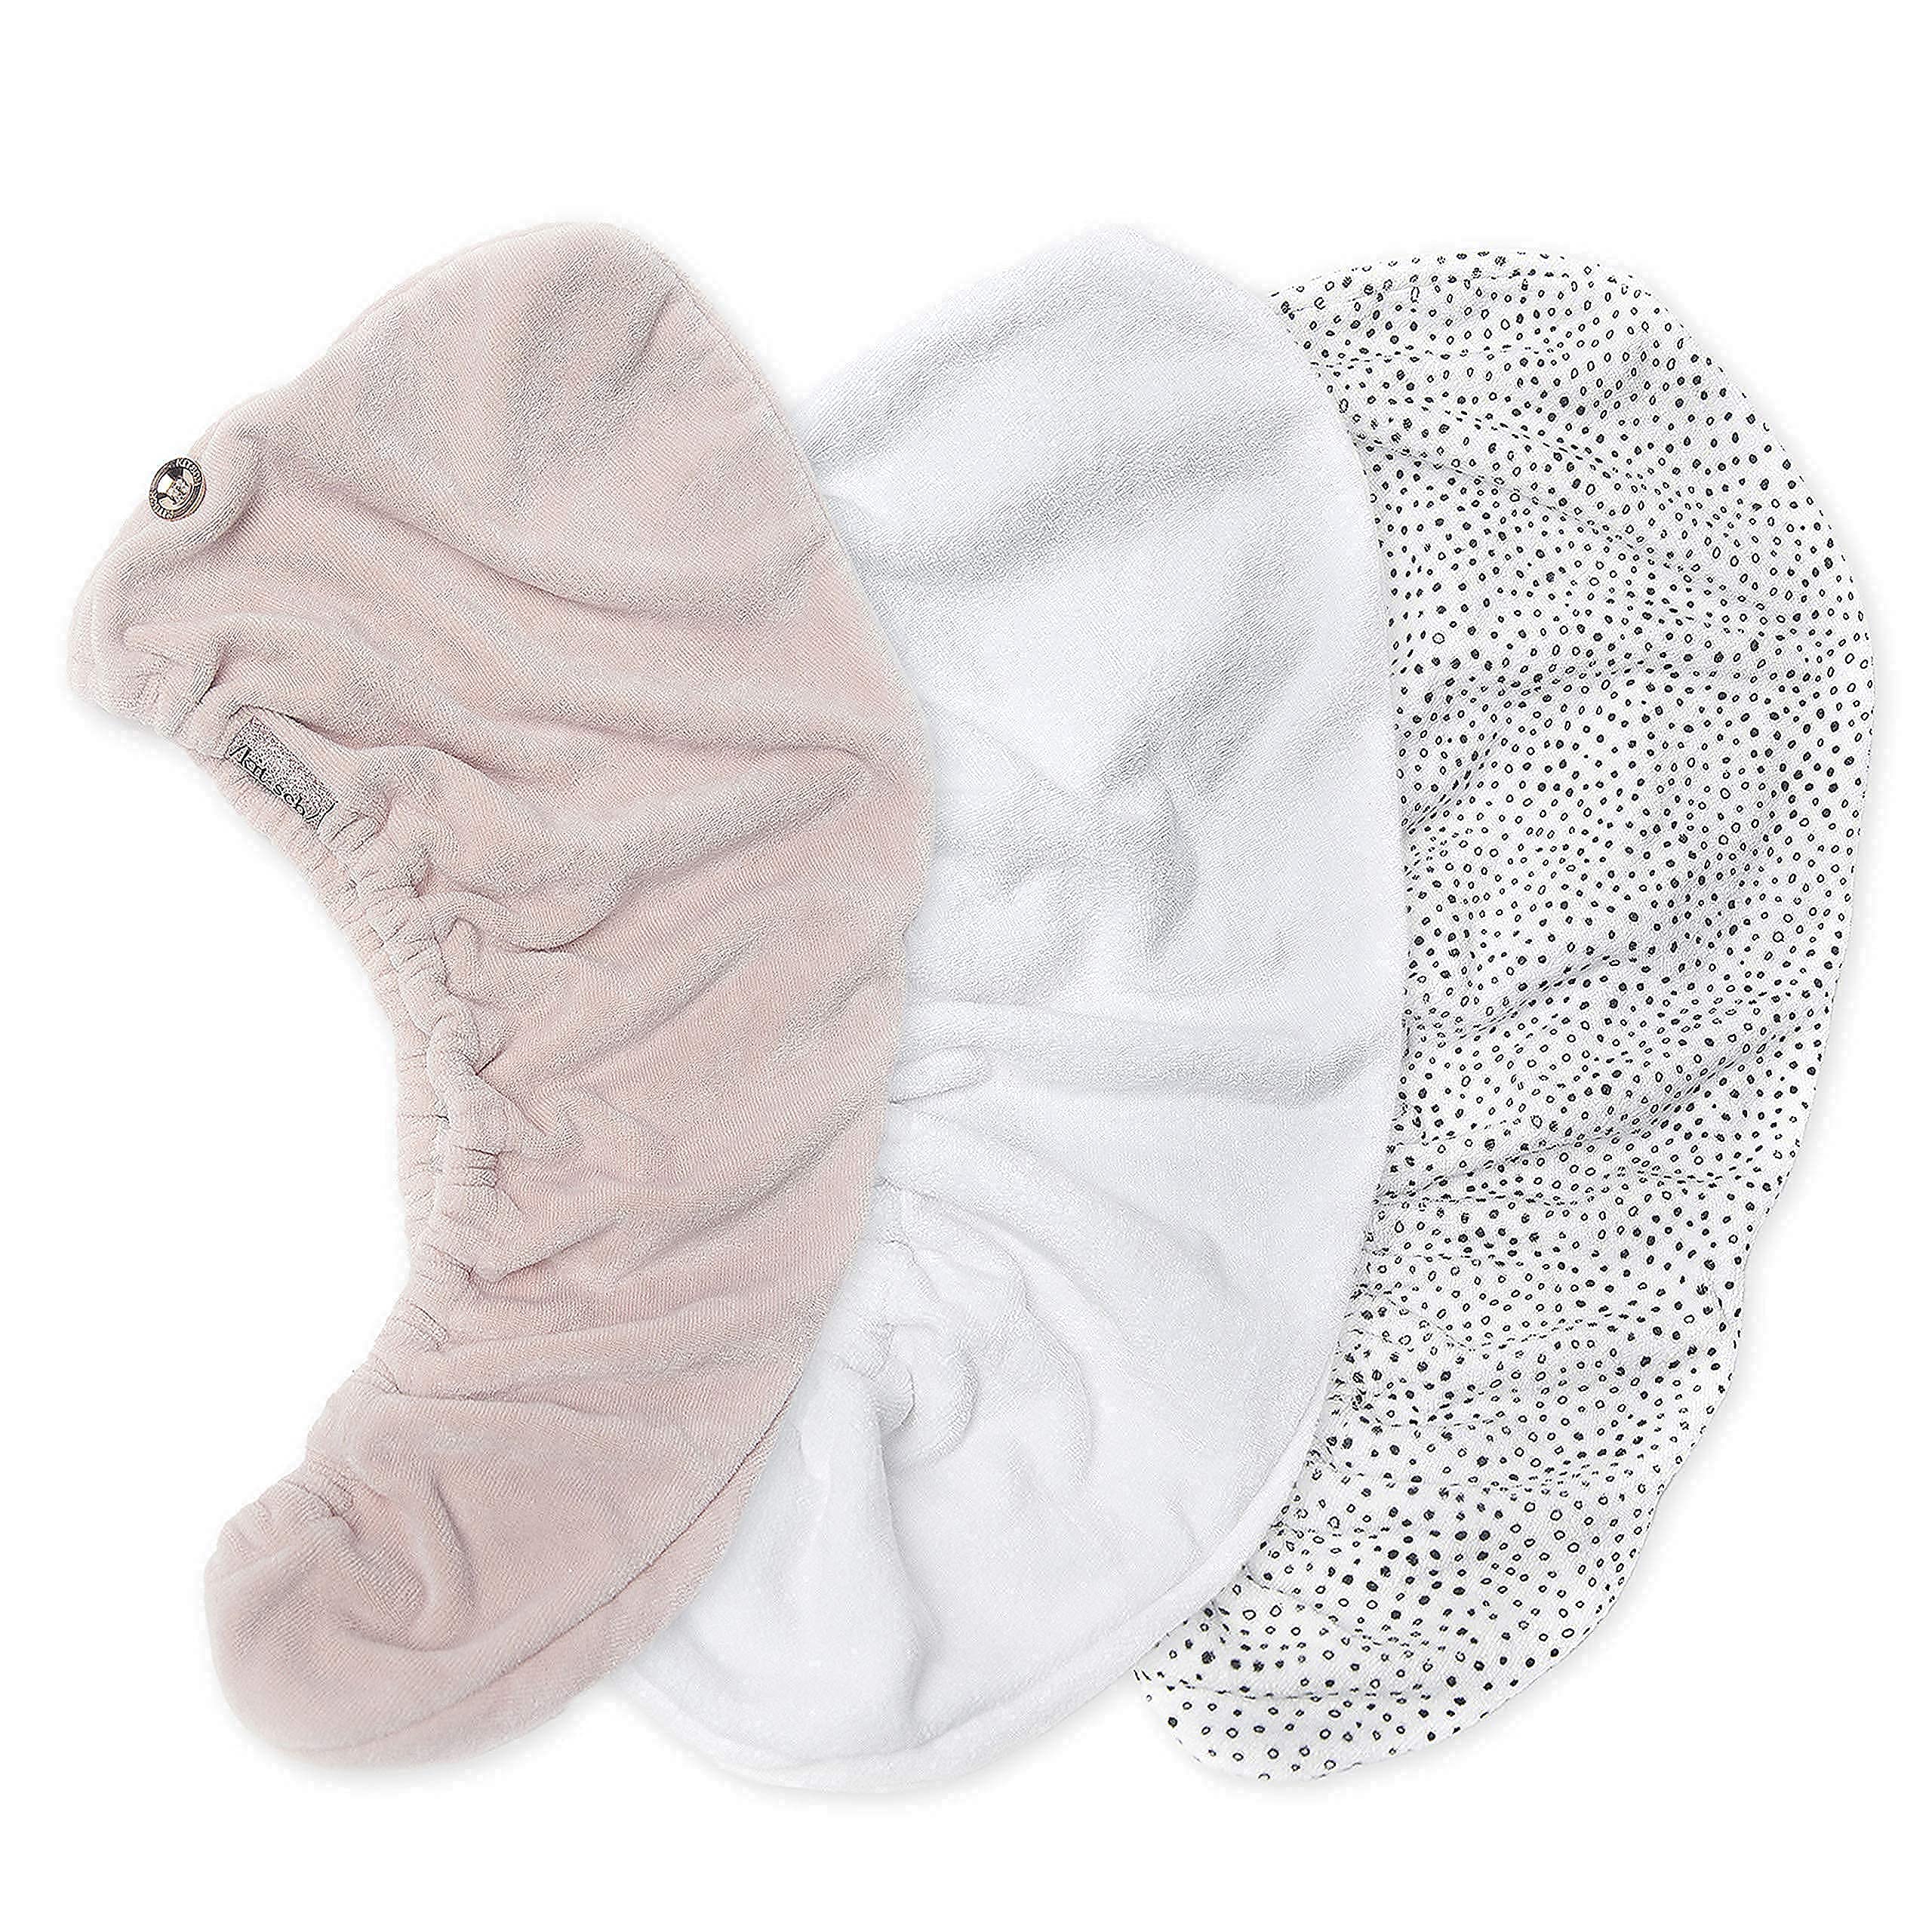 Kitsch Microfiber Hair Towel Wrap | Hair Turban for Drying Wet Hair Easy Twist Hair Towels | Cleanse Bundle (Blush | Micro Dot | White)